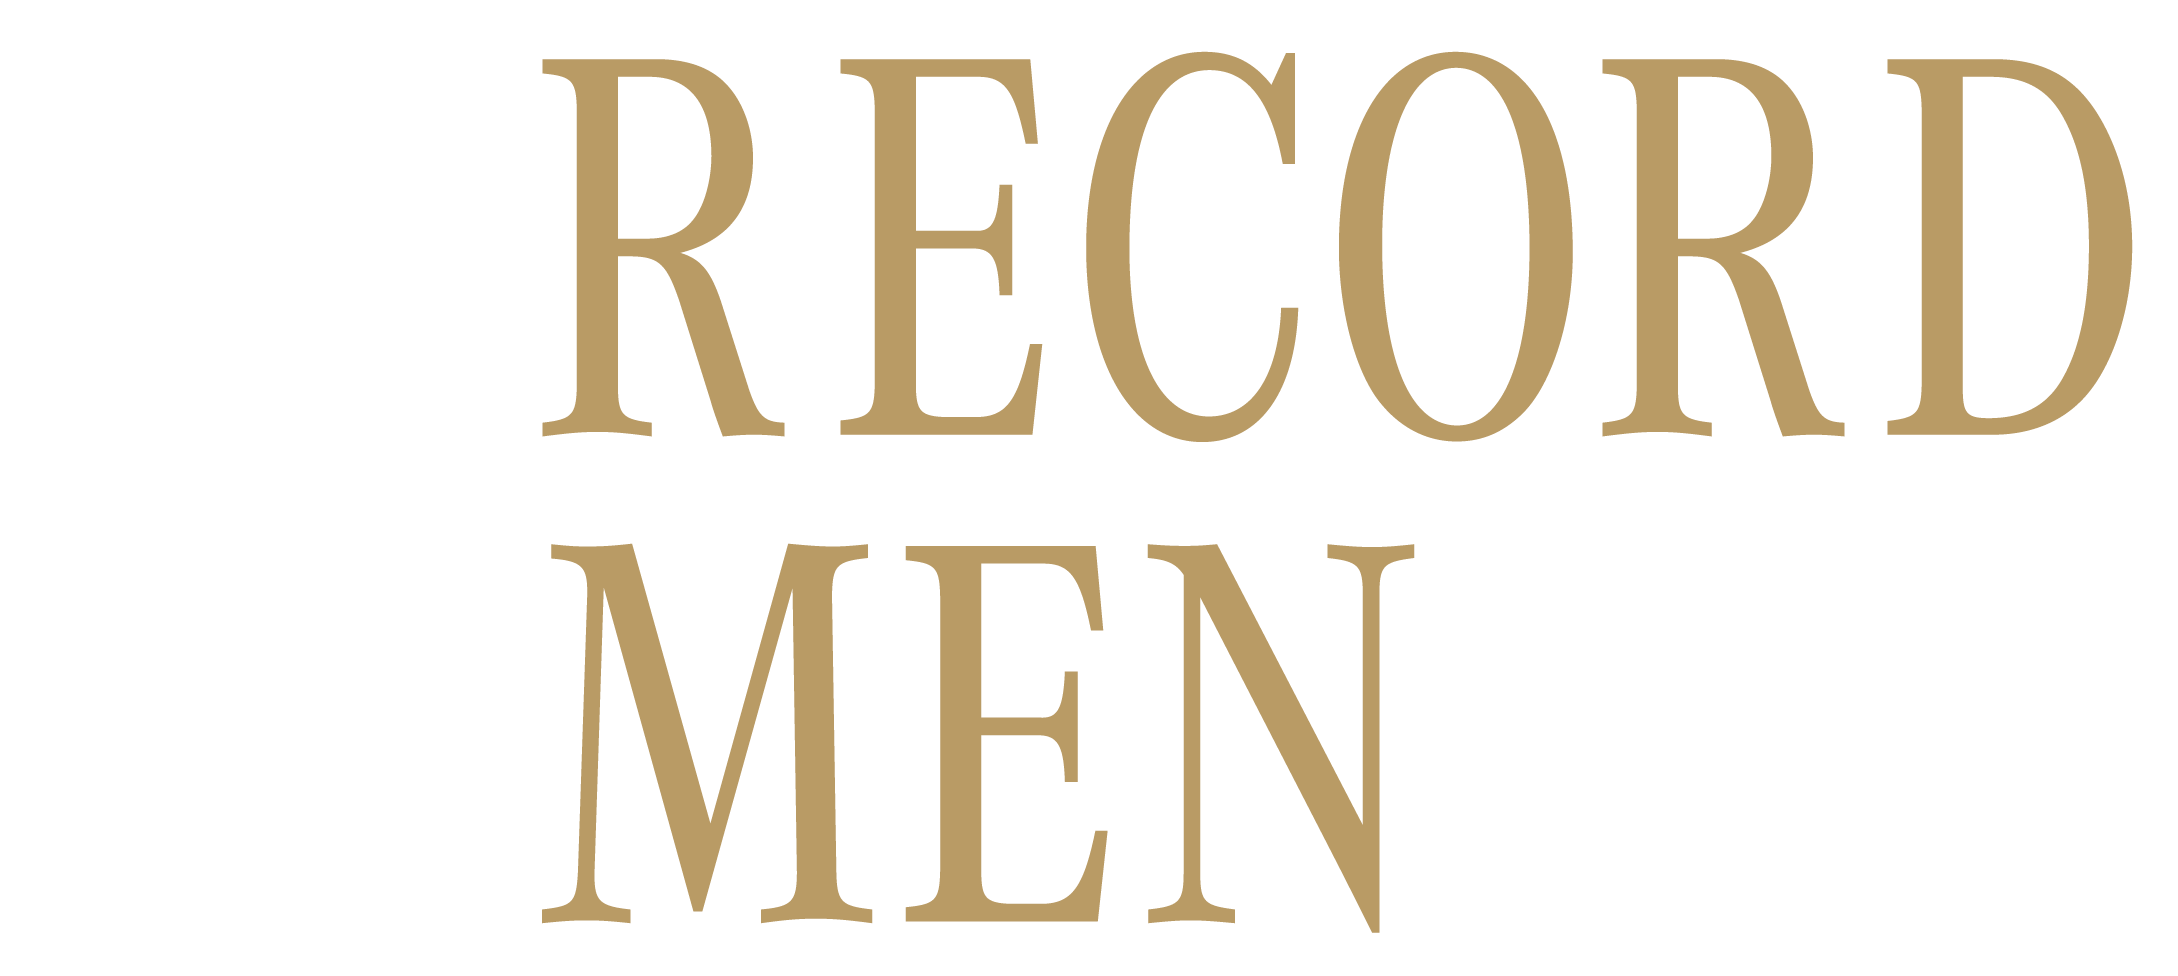 Record Men Logo